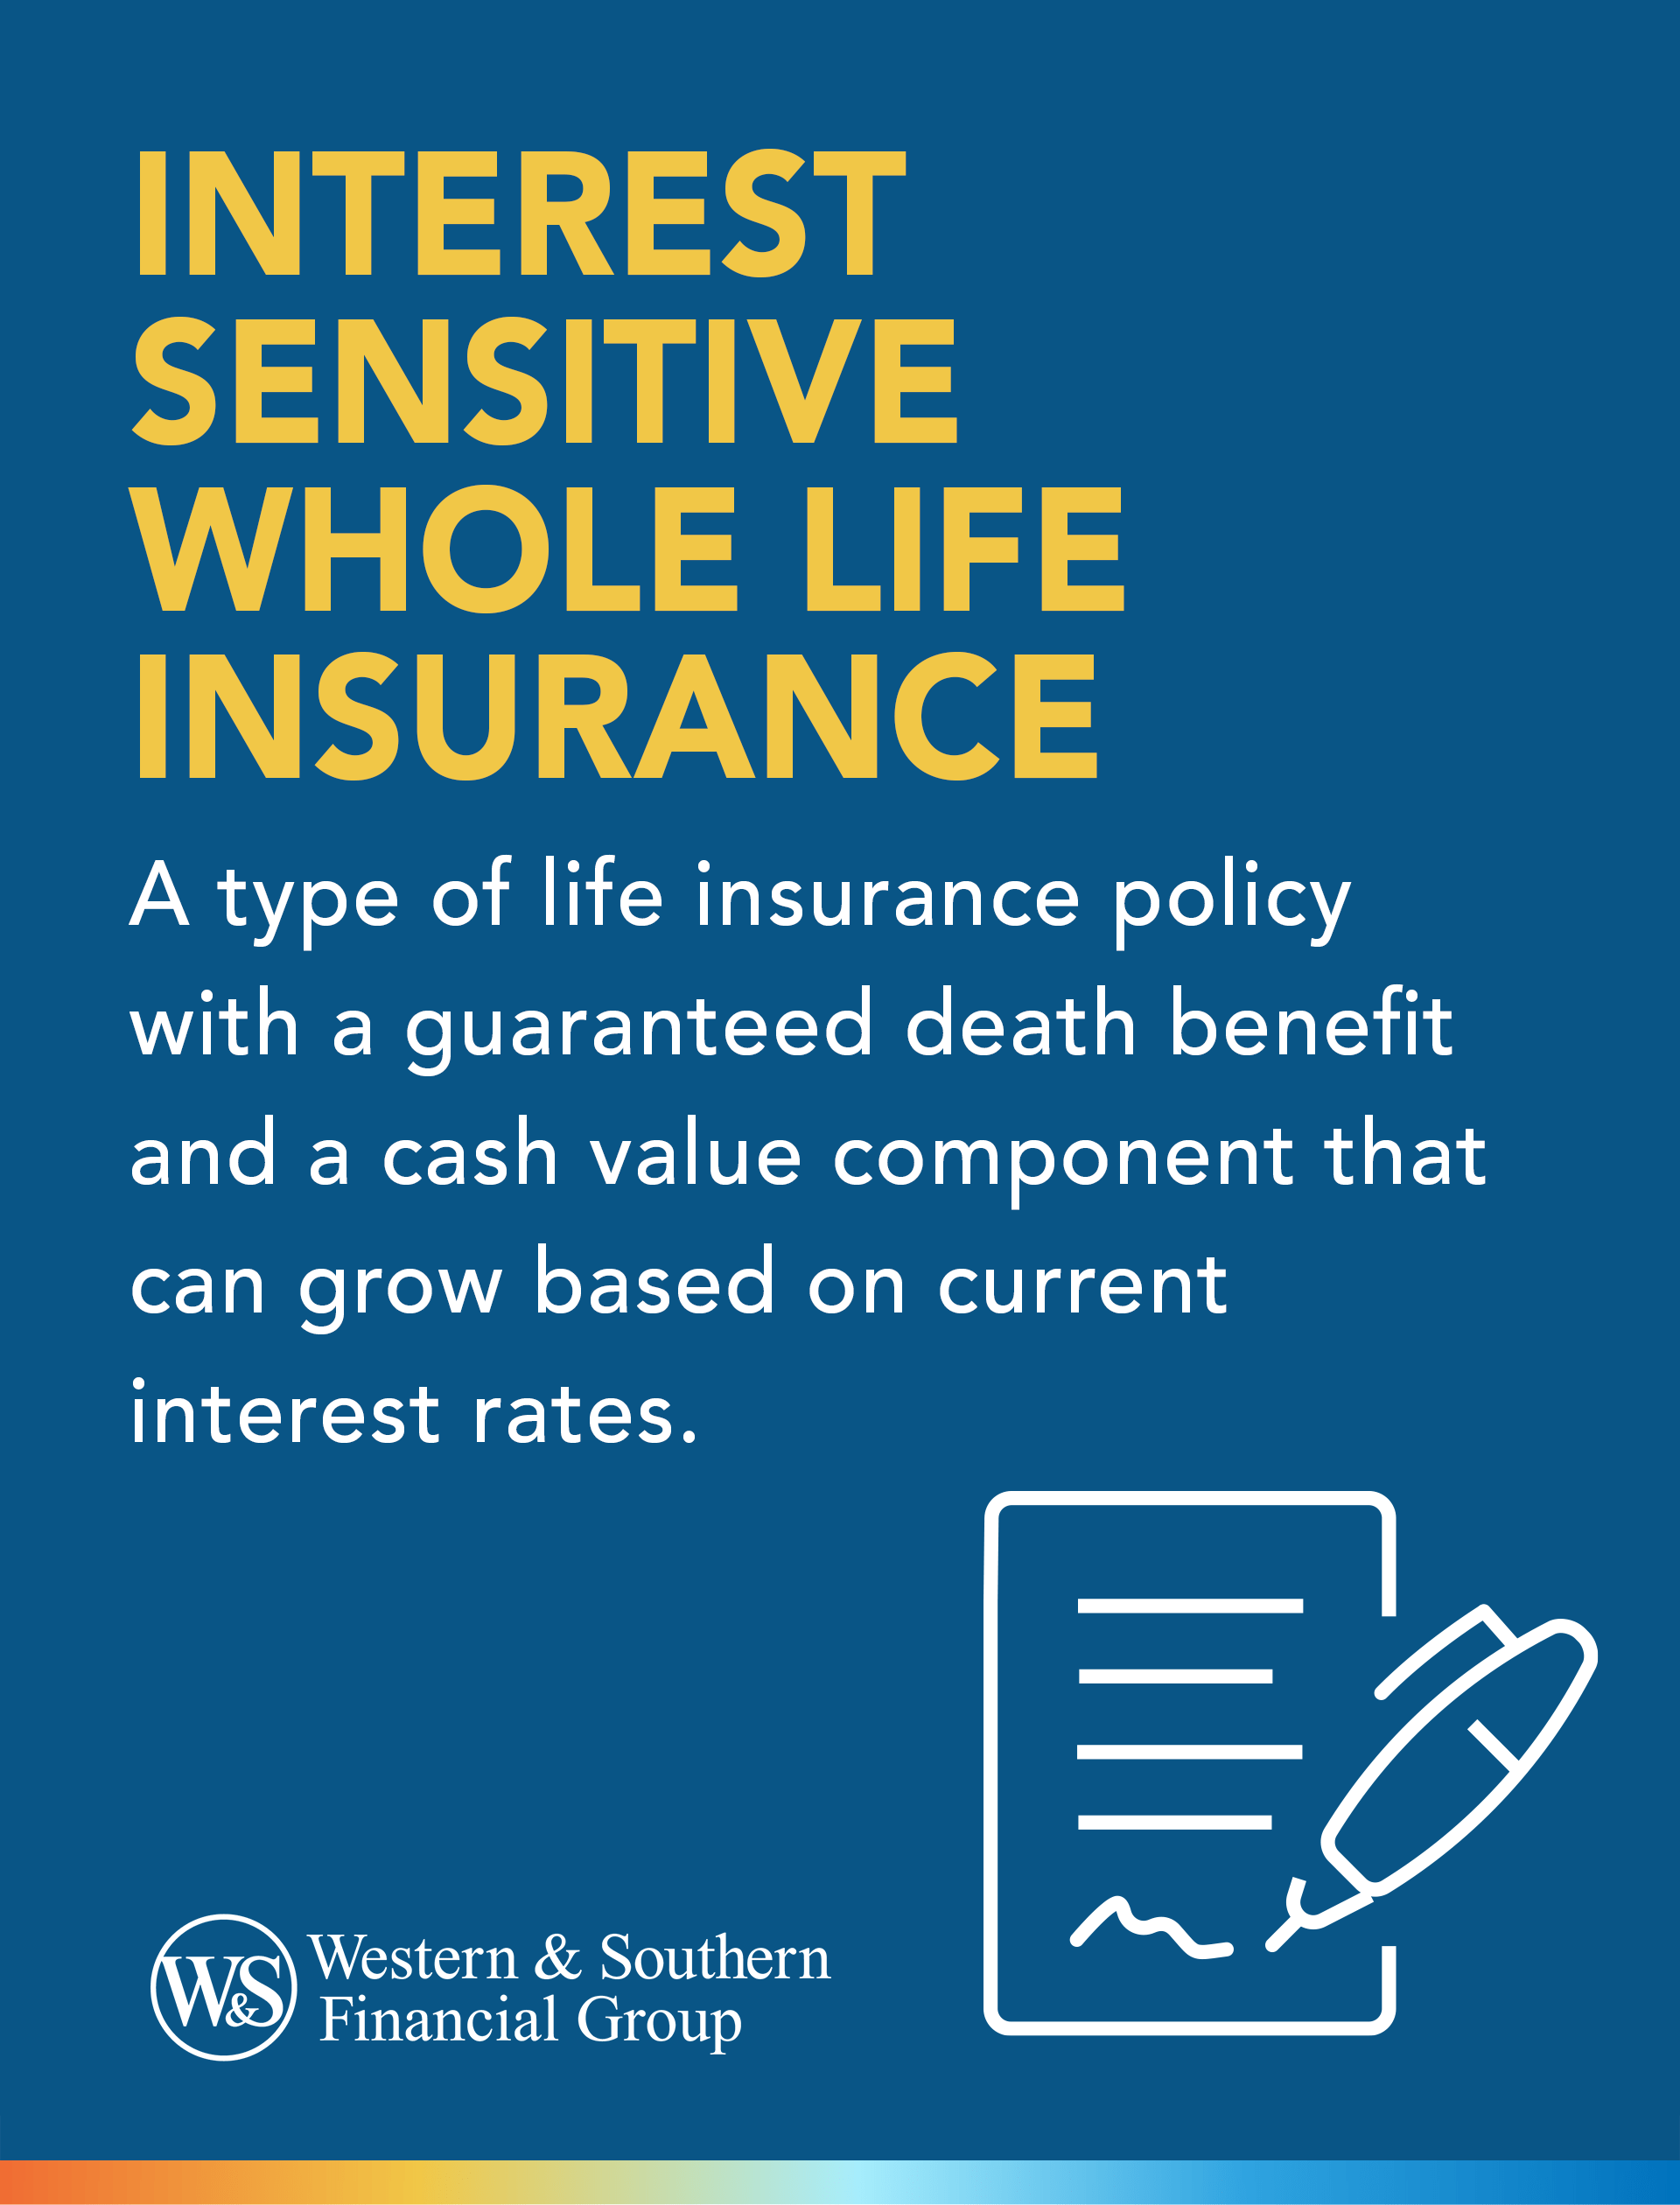 Interest Sensitive Whole Life Insurance Definition